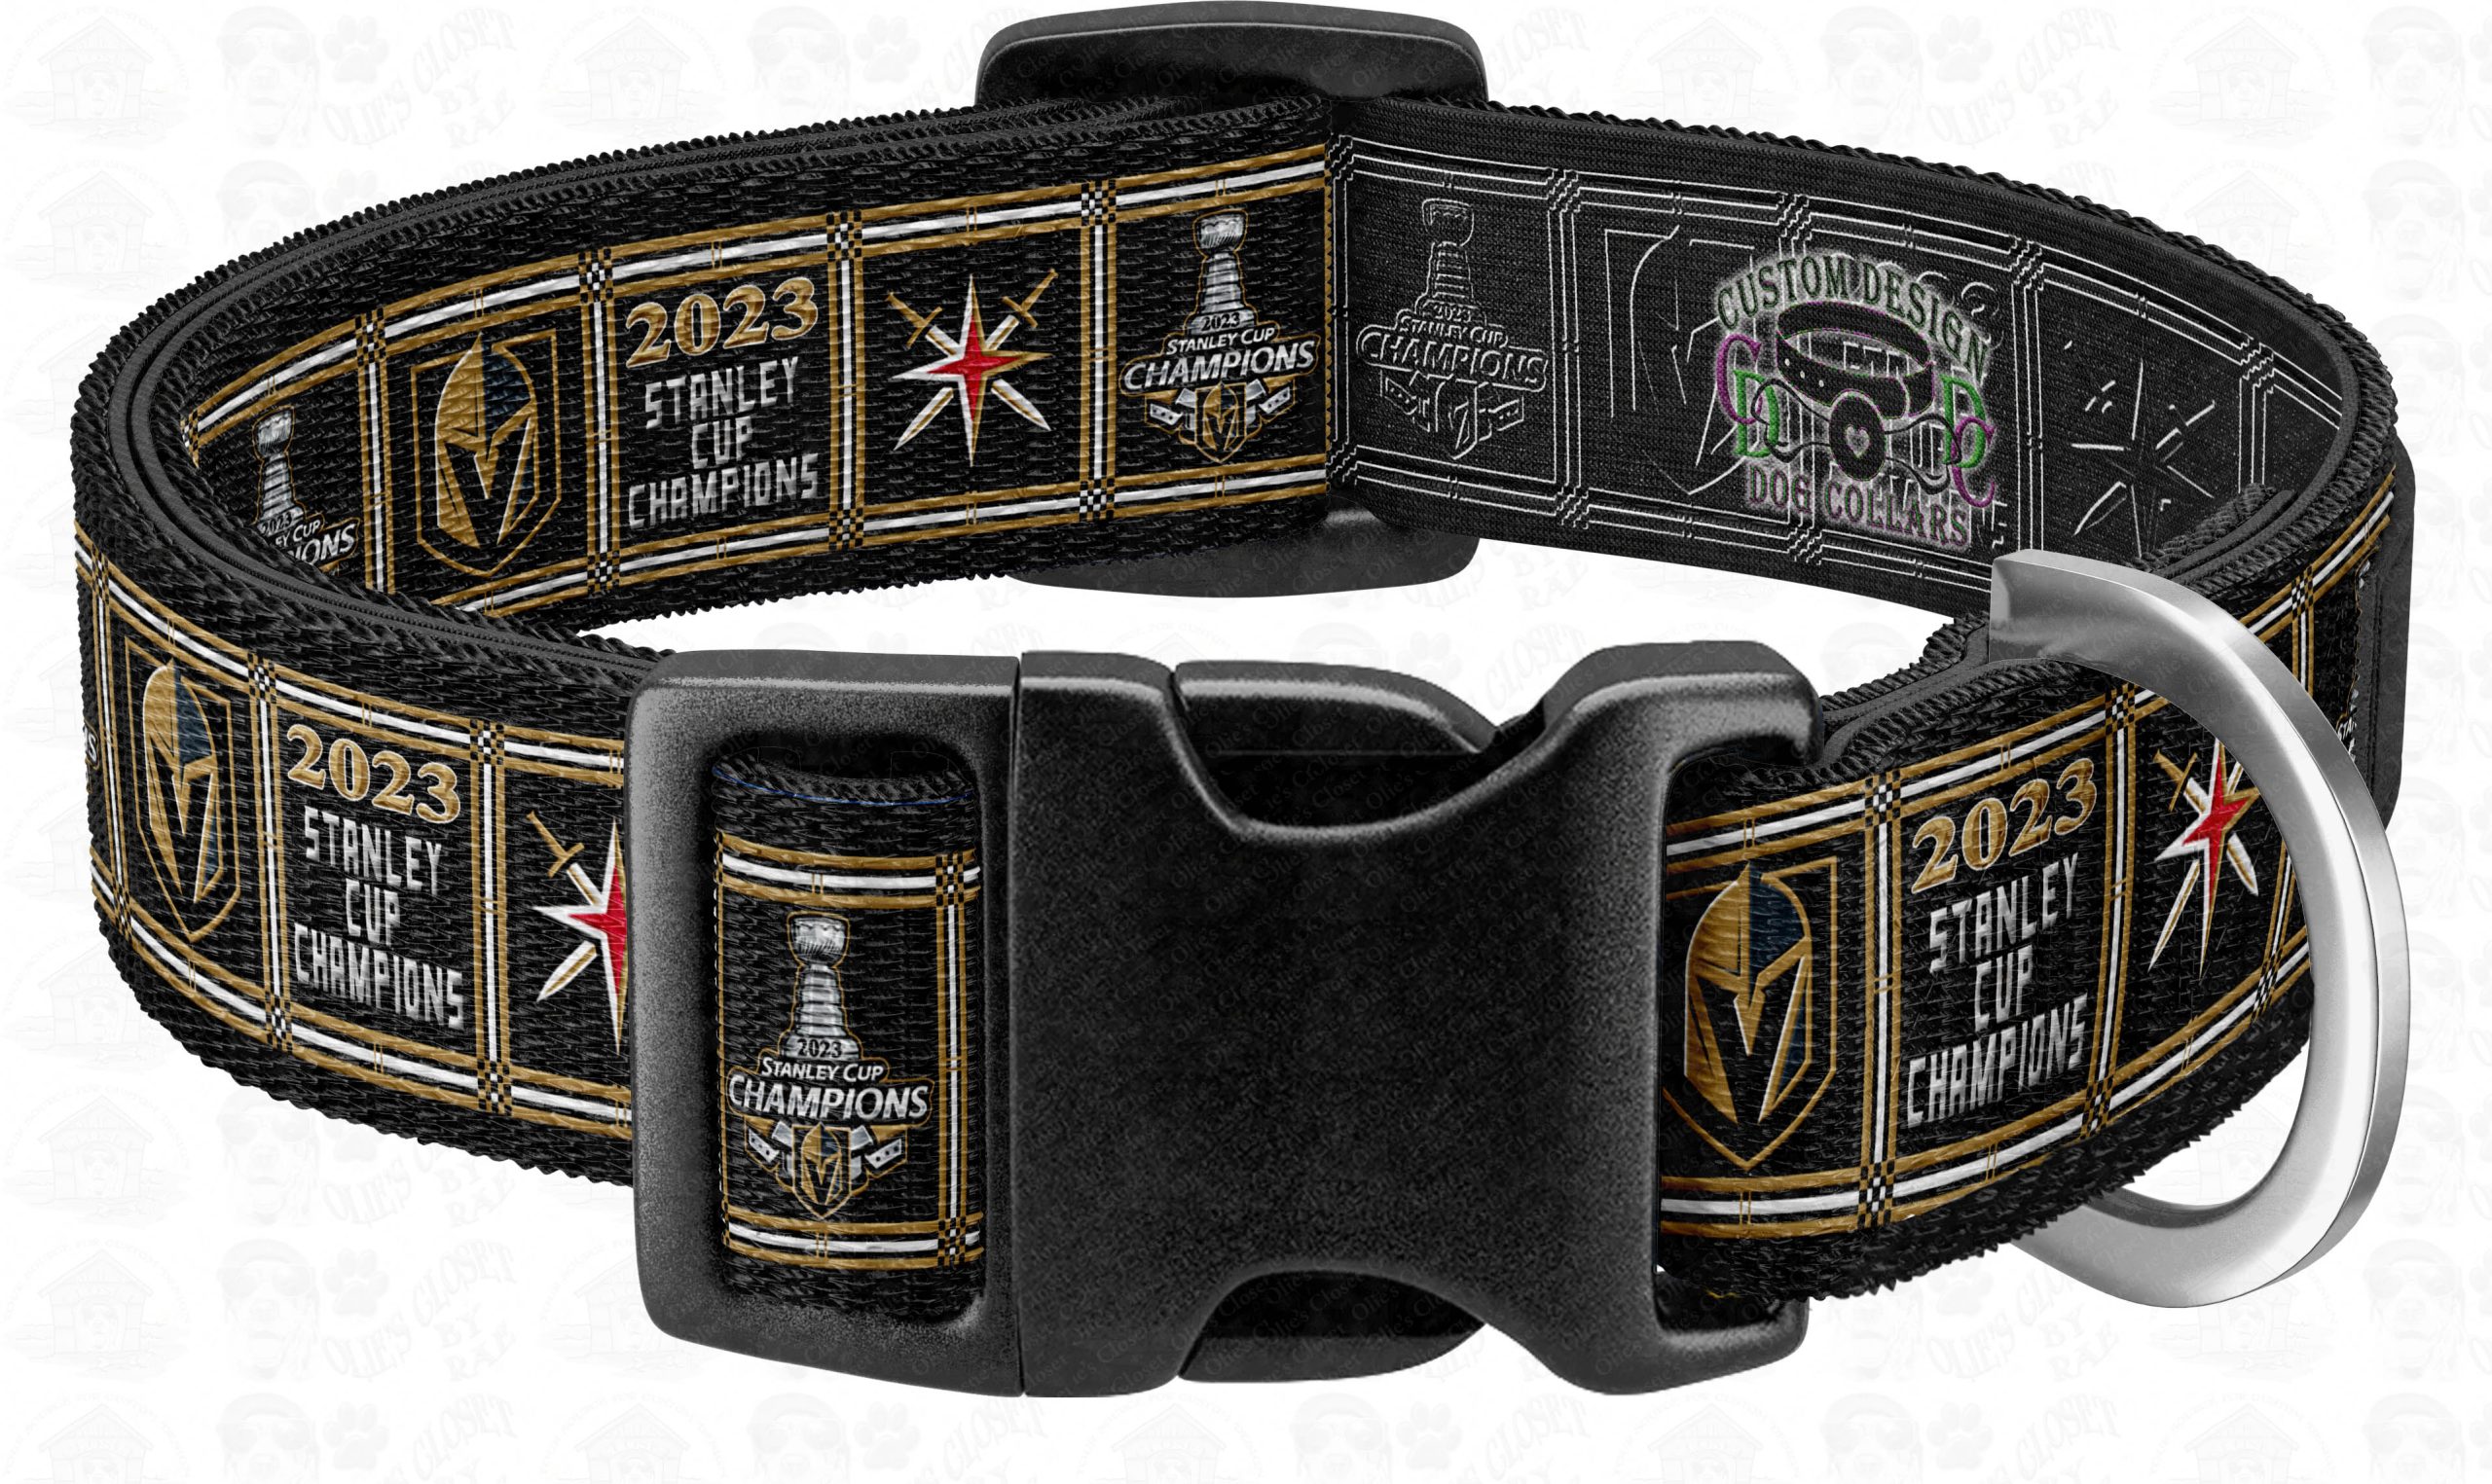 BLACK Stanley Cup Champions 2023 Vegas Golden Knights Pet Collar